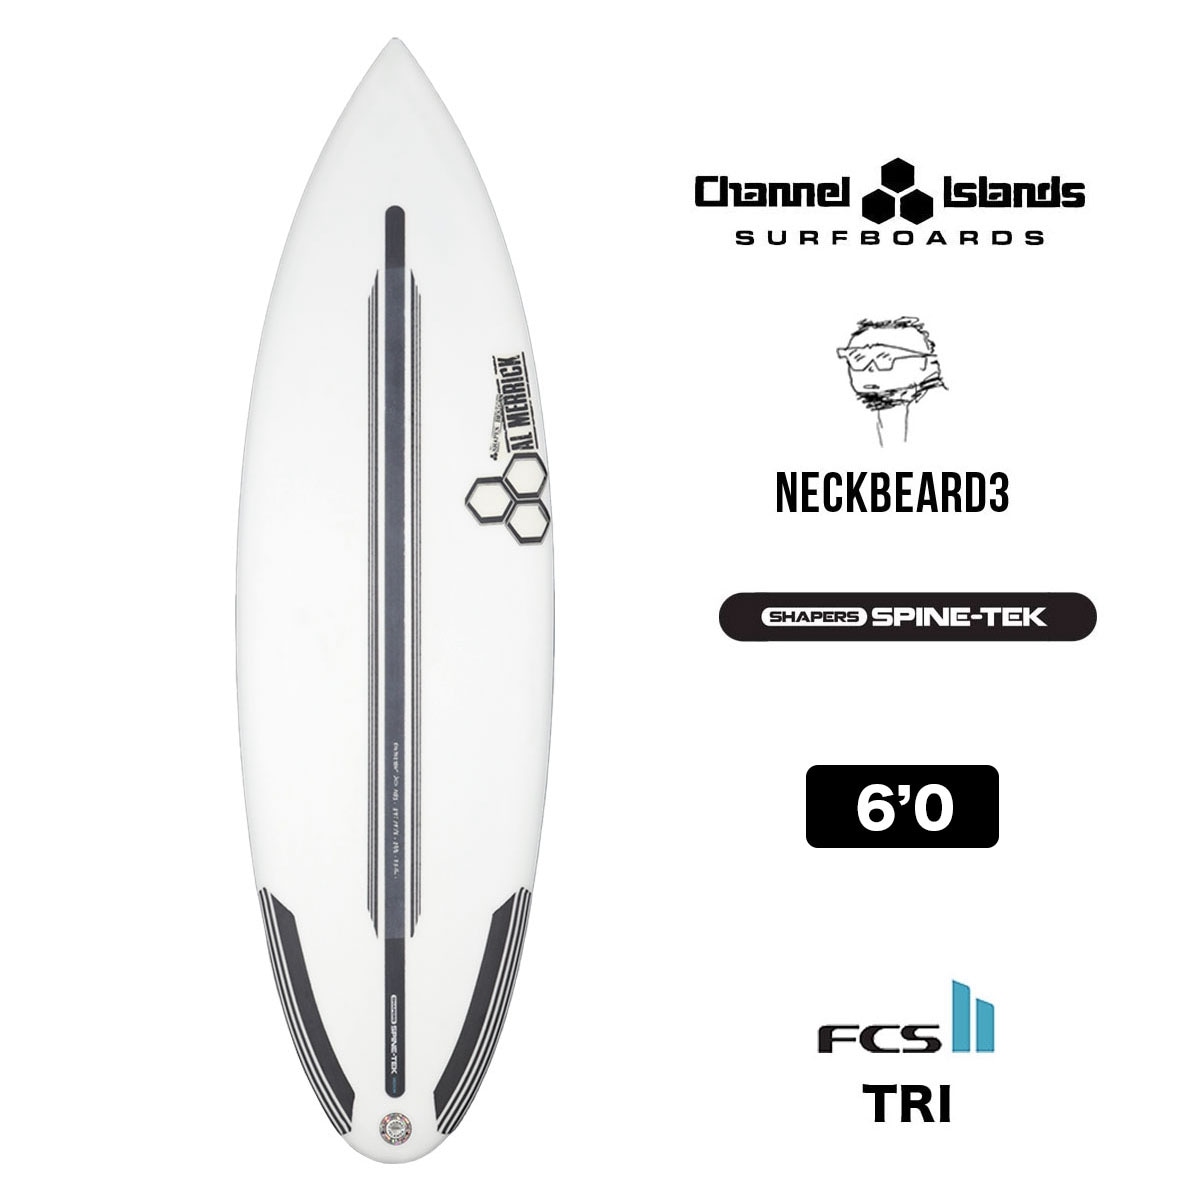 【10%OFF】 チャンネルアイランド 6.0 ネックベアード3 fcs2 TRI アルメリック スパインテック ラウンドテール ショートボード  サーフボード Channel Islands NeckBeard3 6'0-ジャックオーシャンスポーツ